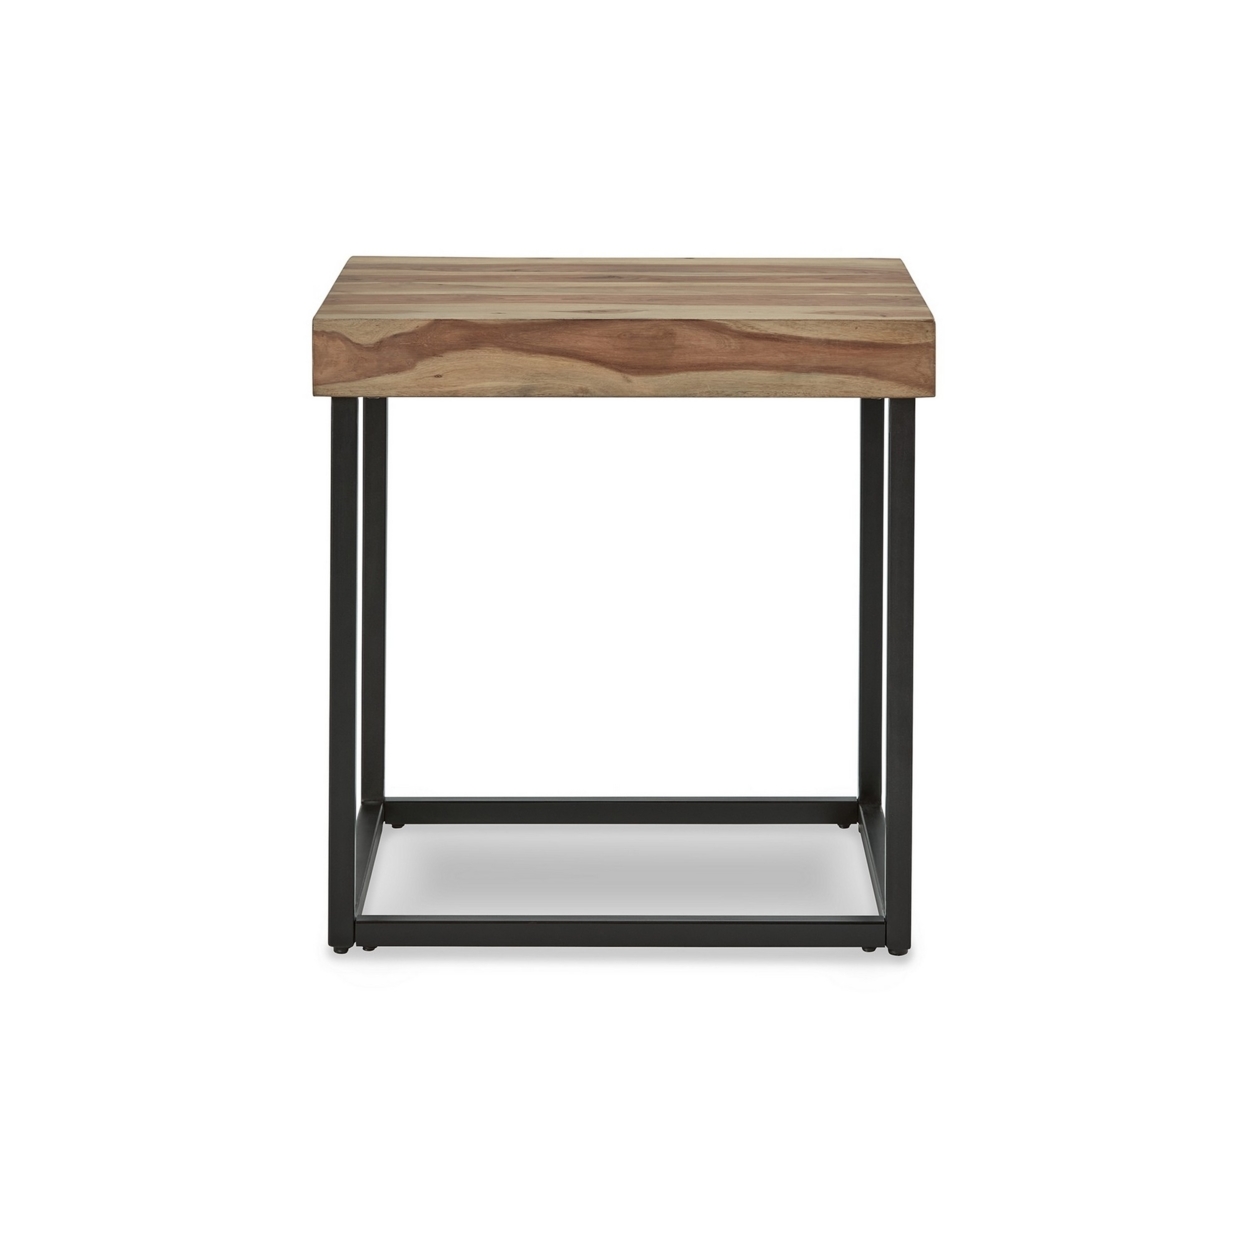 24 Inch Square Side End Table, Natural Brown Wood Top, Black Metal Base- Saltoro Sherpi